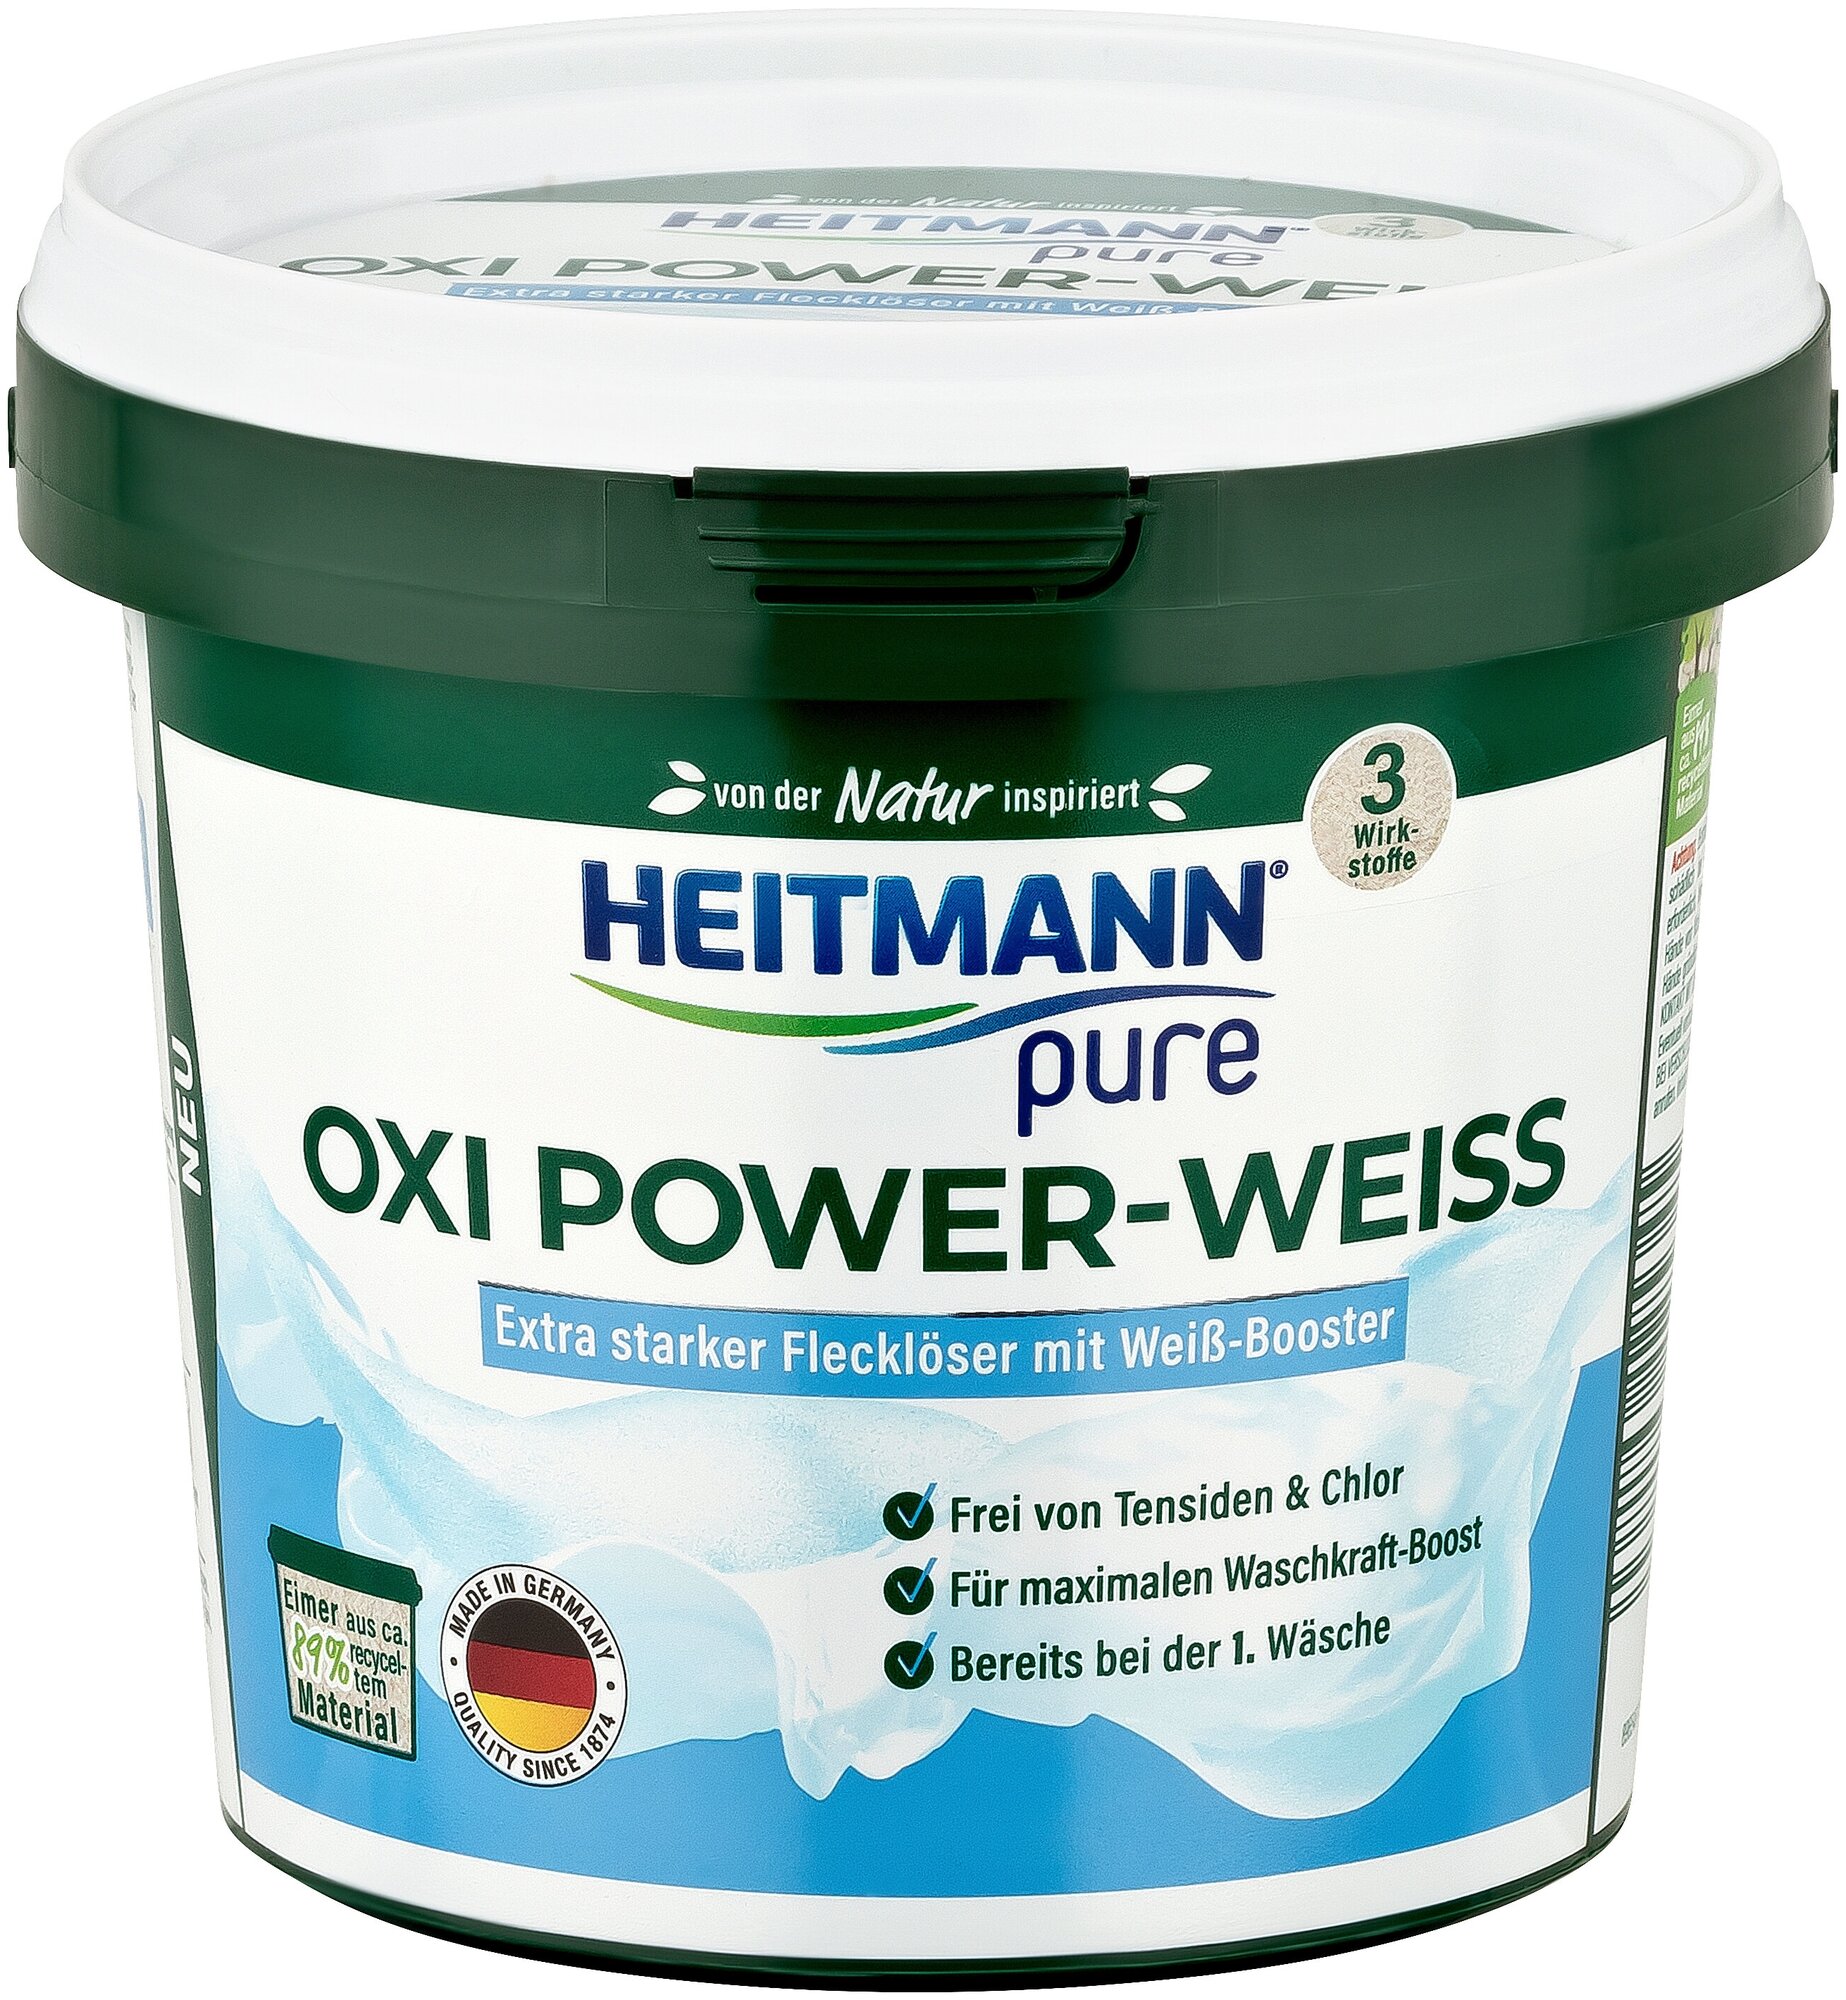 Heitmann Oxi Power-Weiss Пятновыводитель для белых тканей 500 г